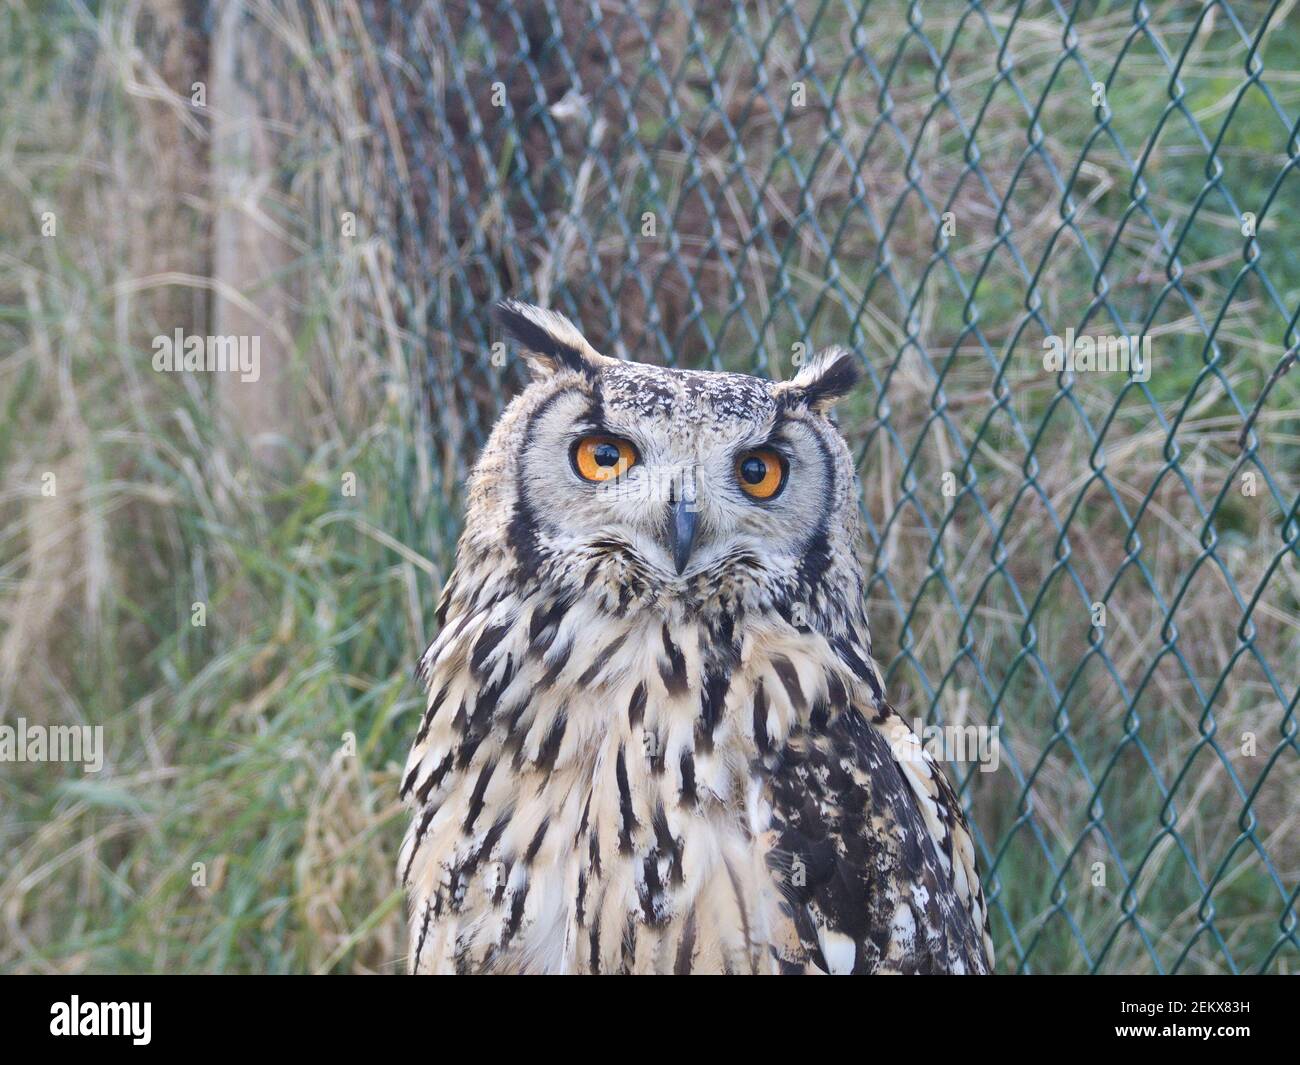 owl, eagle owl, Strigiformes, Aves, bird, nocturnal, predator, avian, solitary, feathered friends Stock Photo